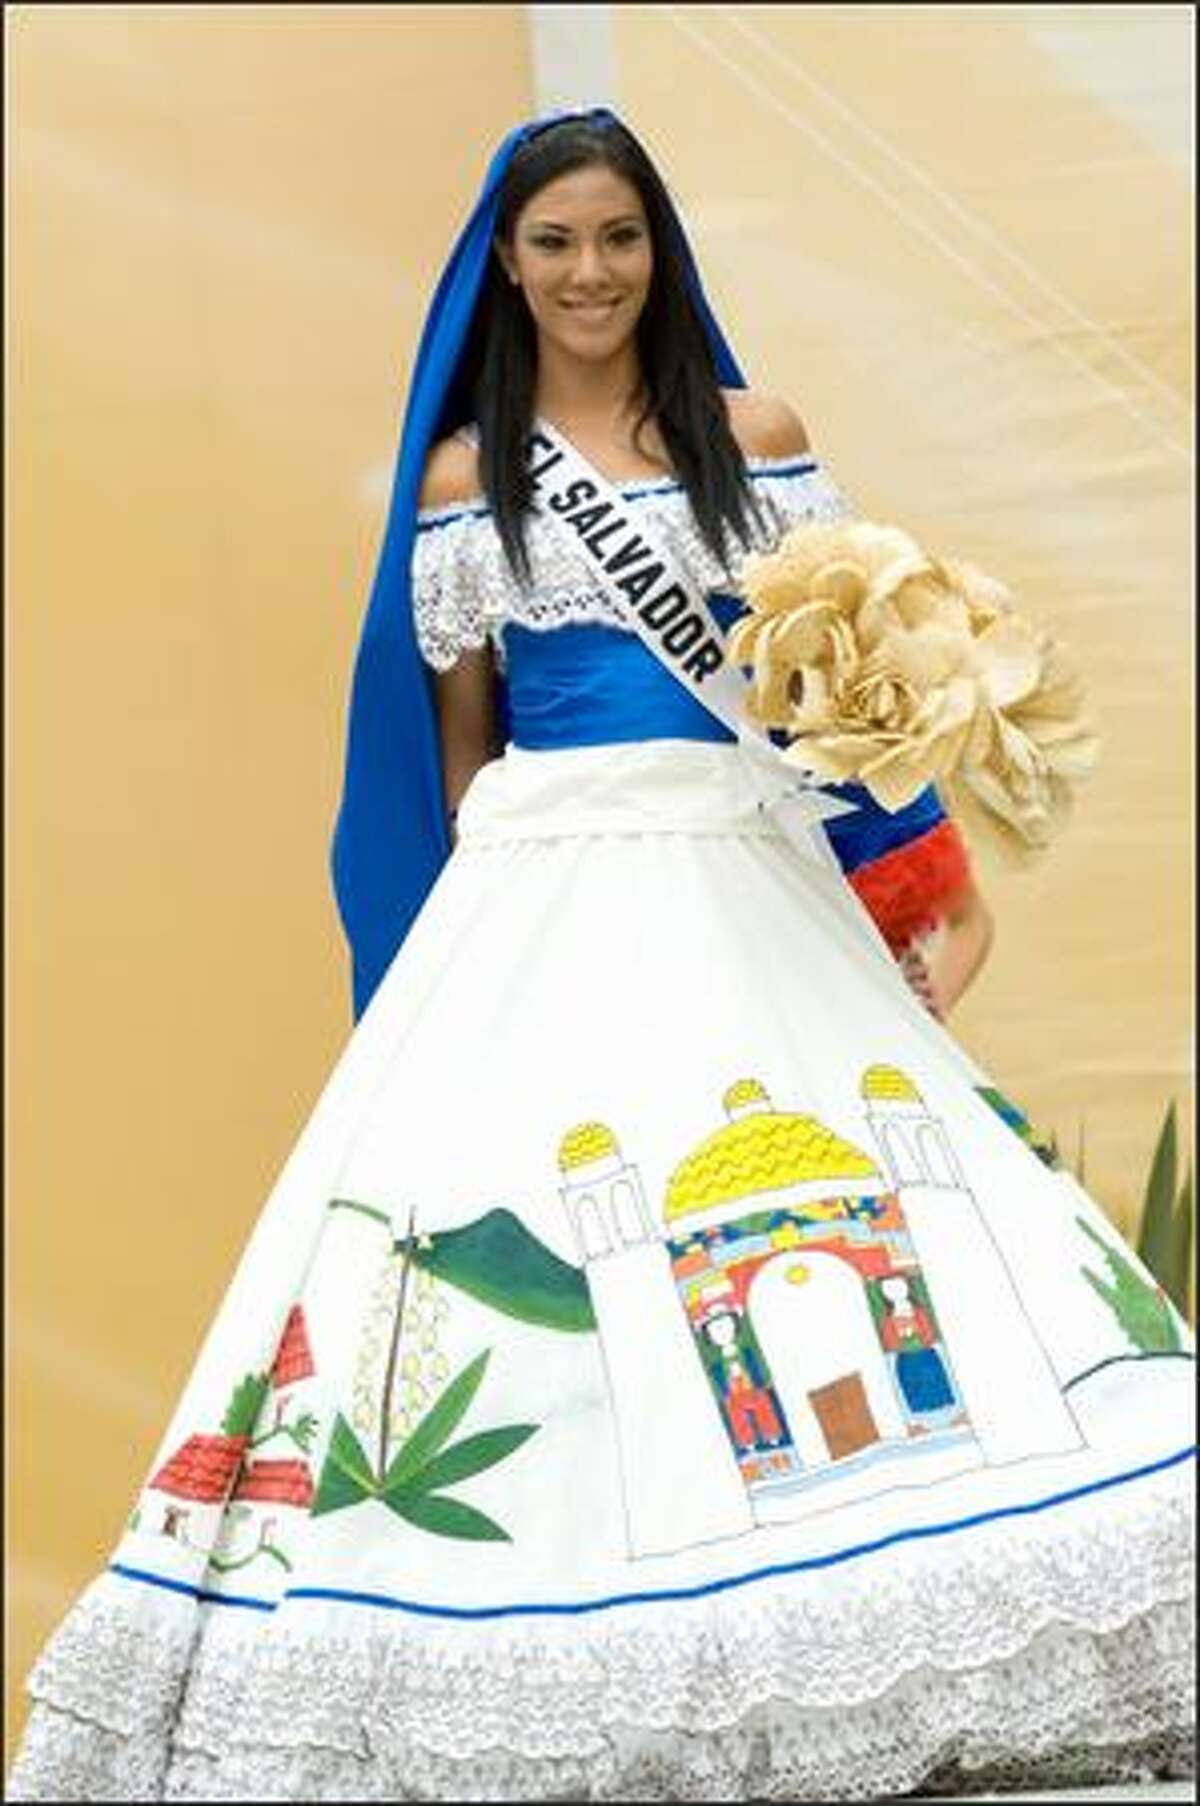 Lissette Rodriguez, Miss El Salvador 2007.